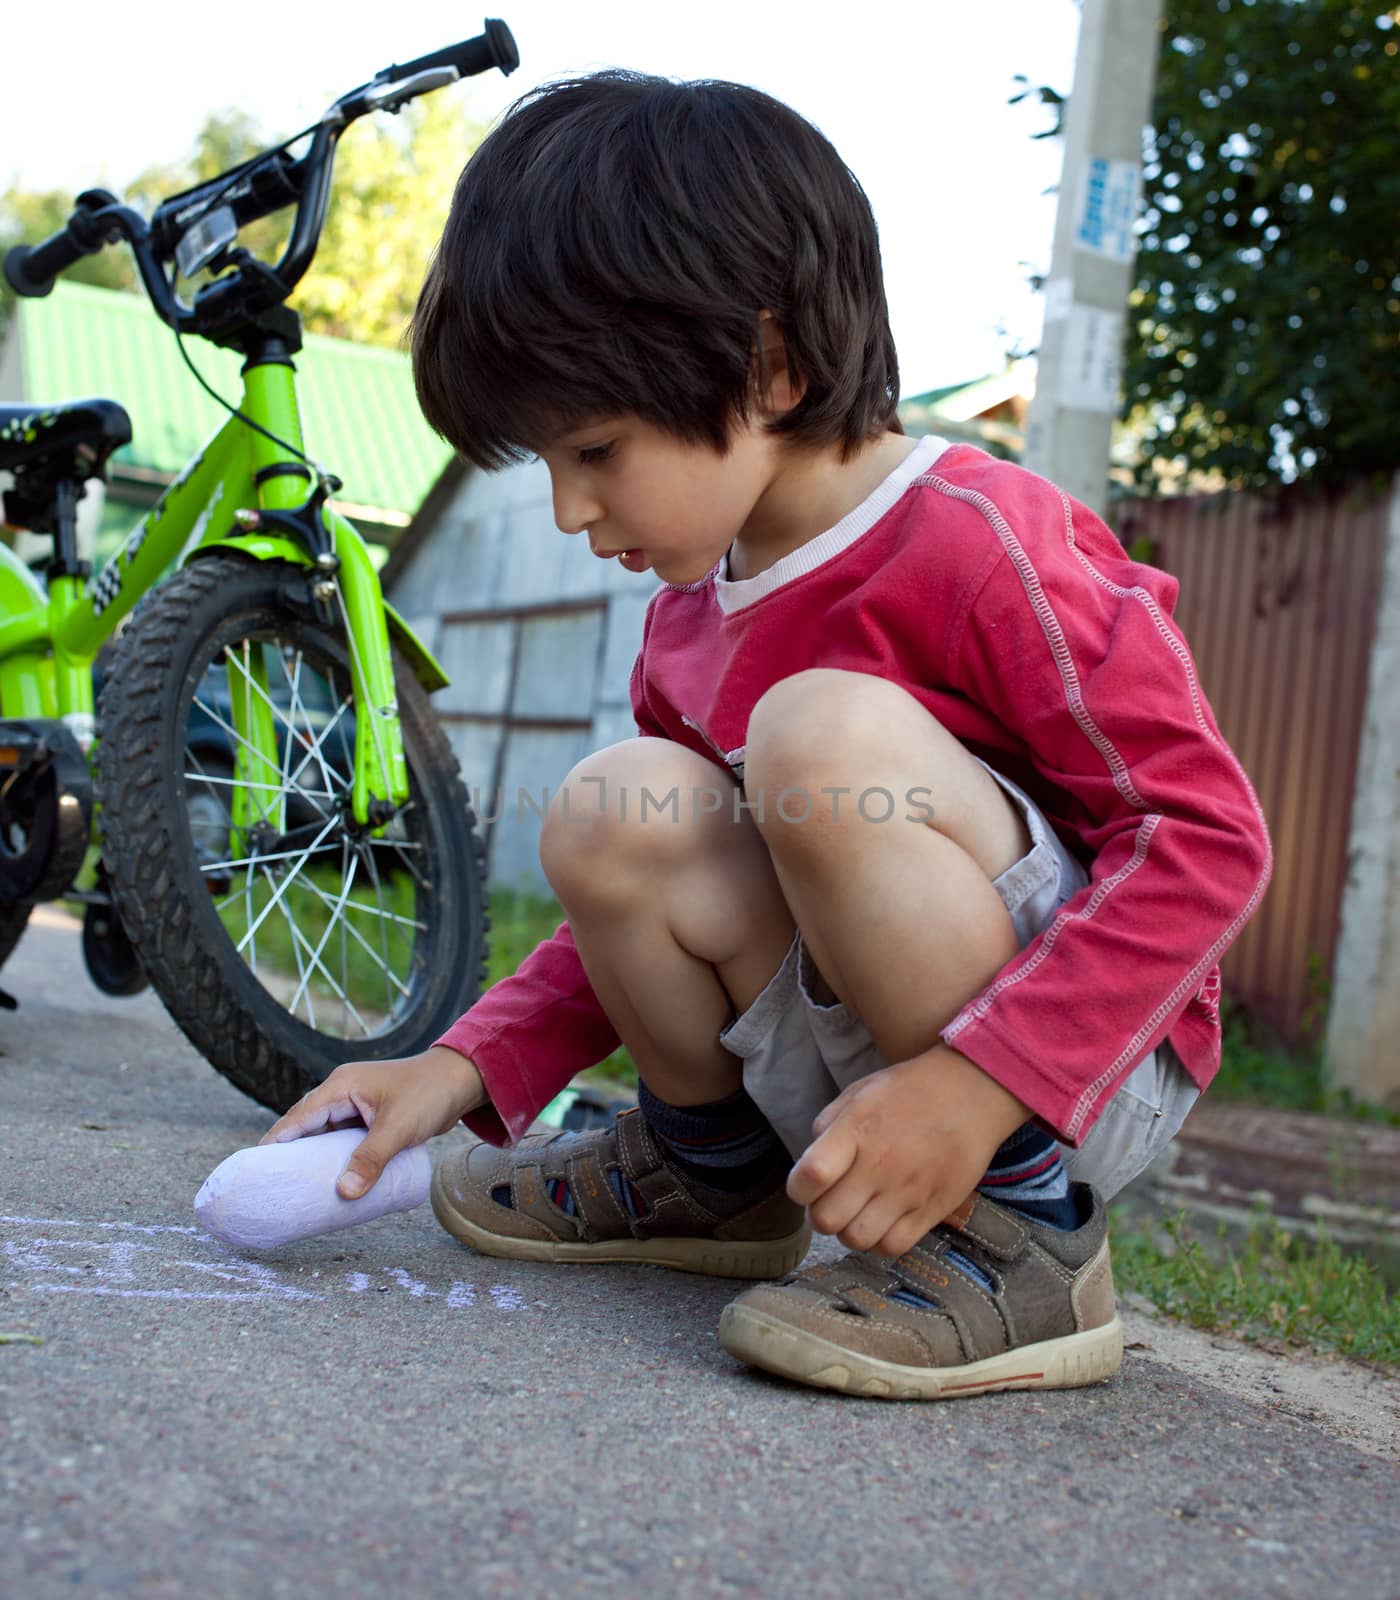 boy  drawing with chalk on asphalt by Astroid